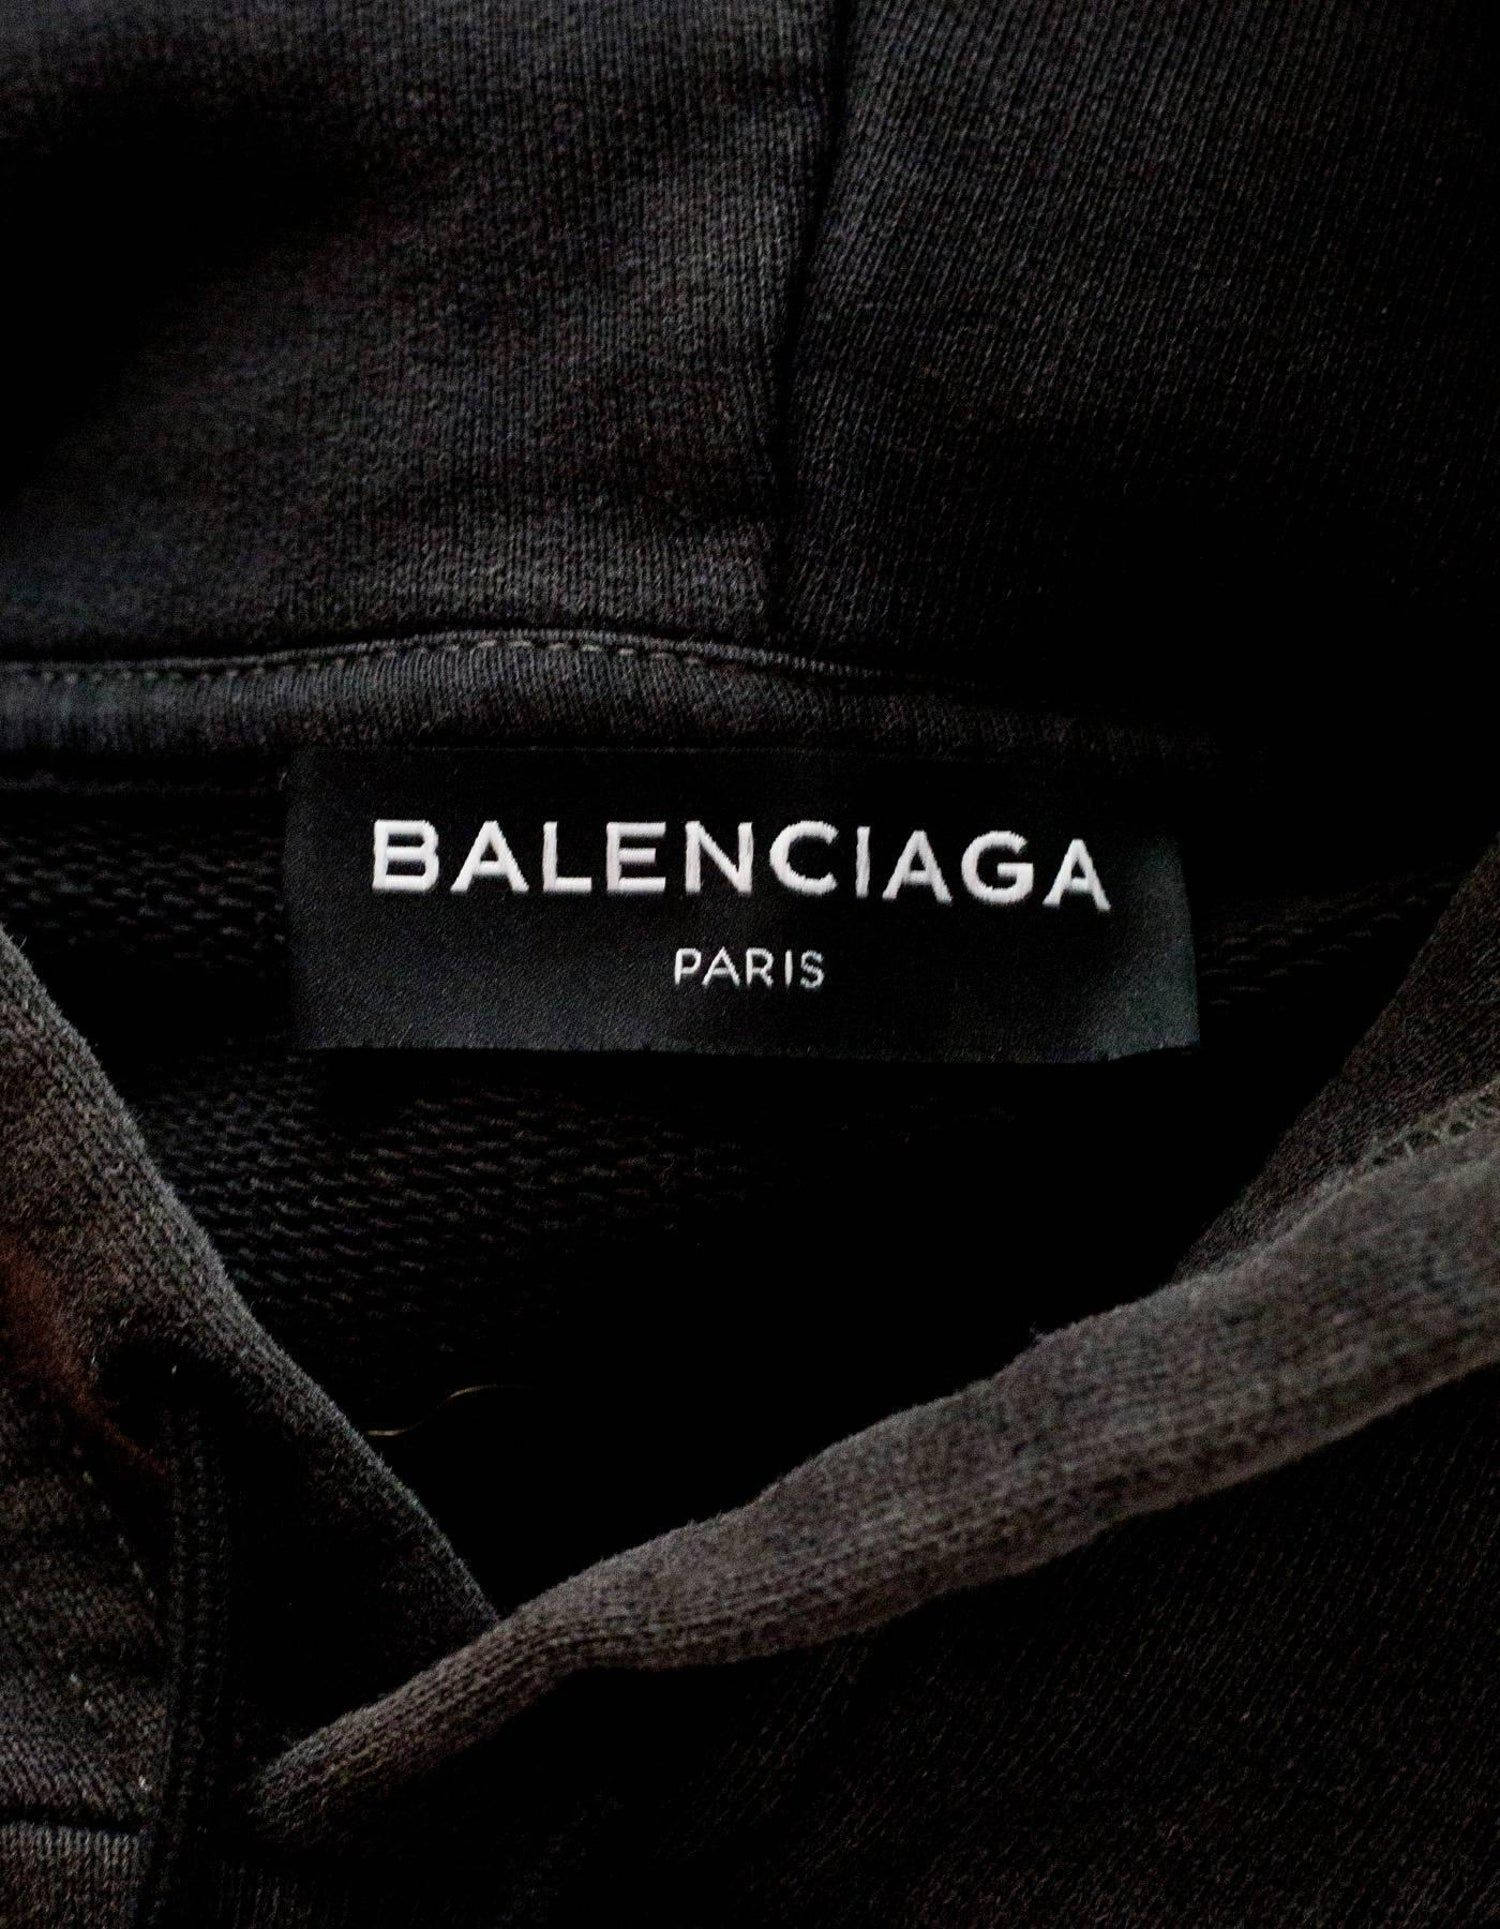 Download Balenciaga Clothing Wallpaper Wallpapers Com